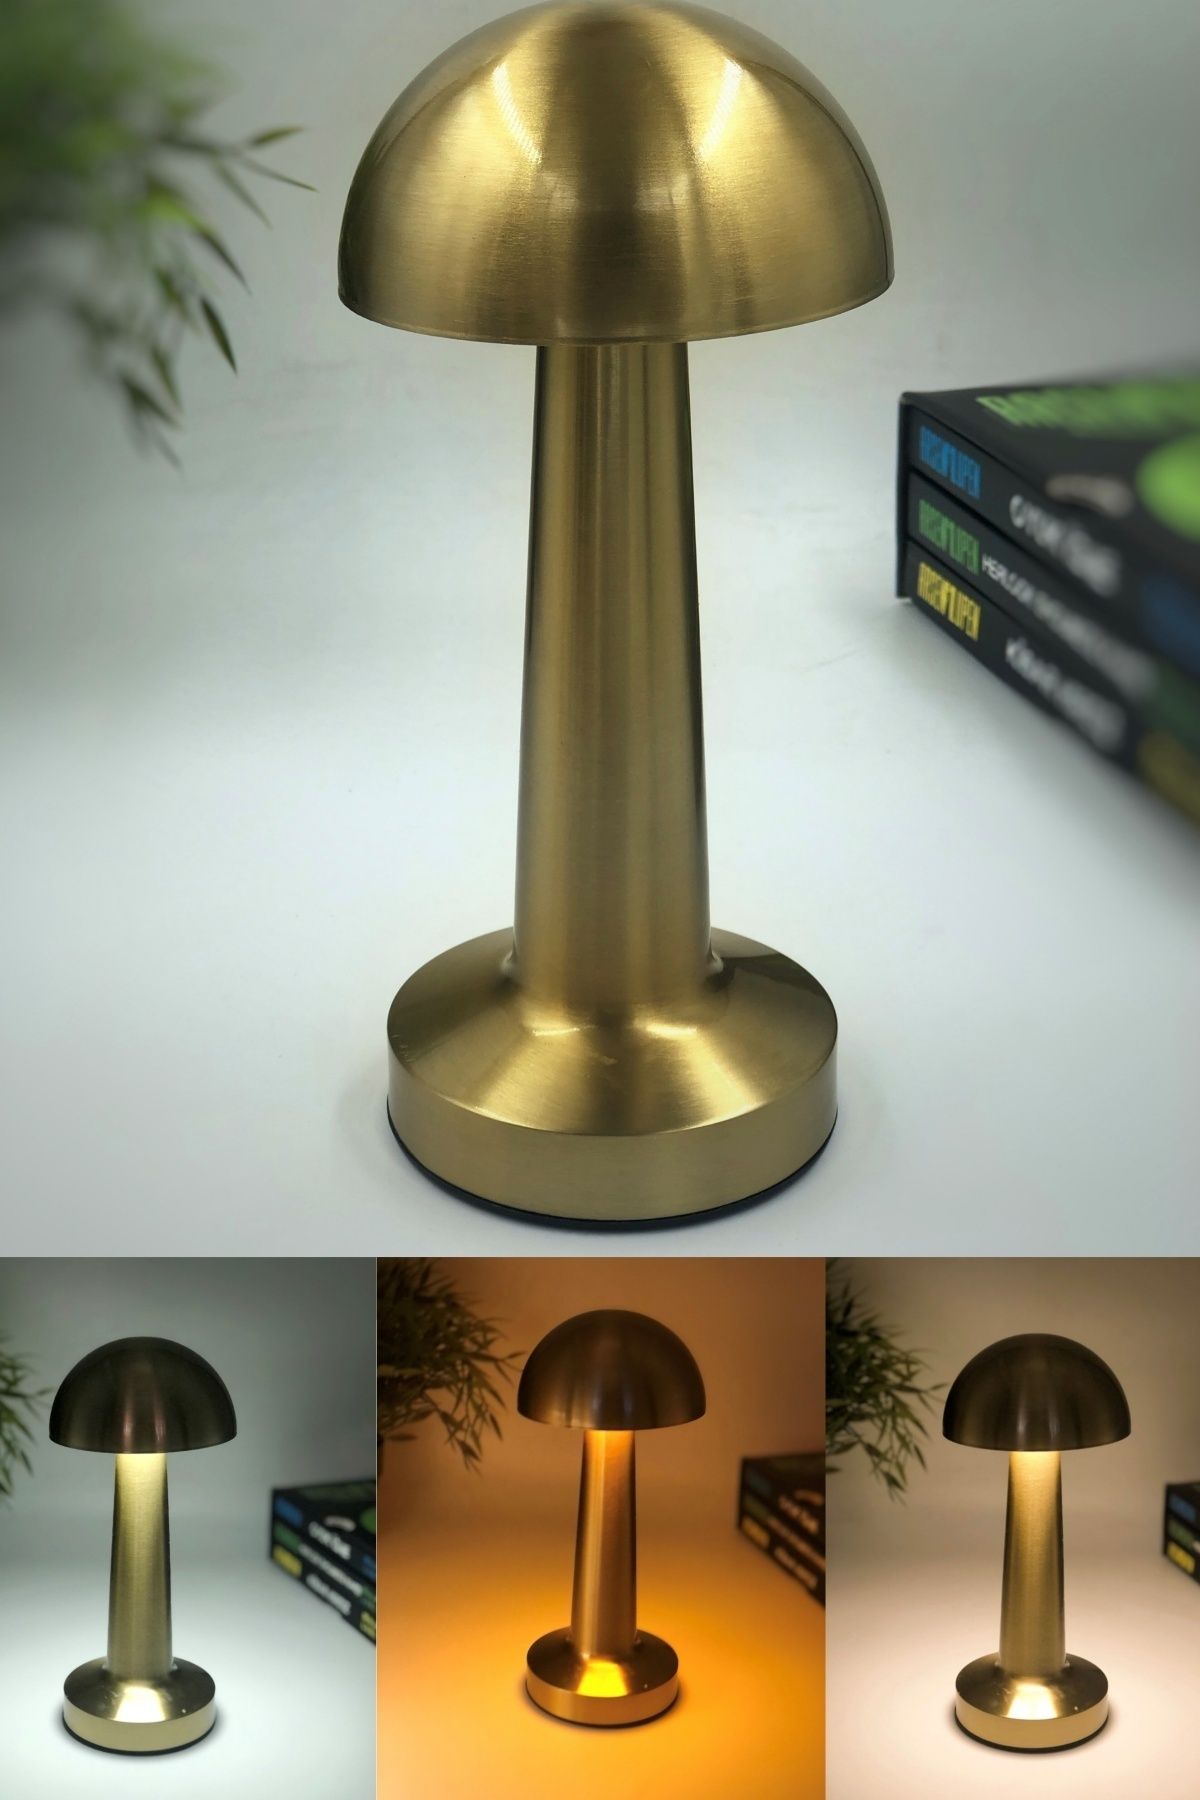 HANGAST Hl-009g Dekoratif Metal Gold Mantar Kablosuz Masa Lambası Ledli 5v 3 Renk Işık Usb Şarjlı